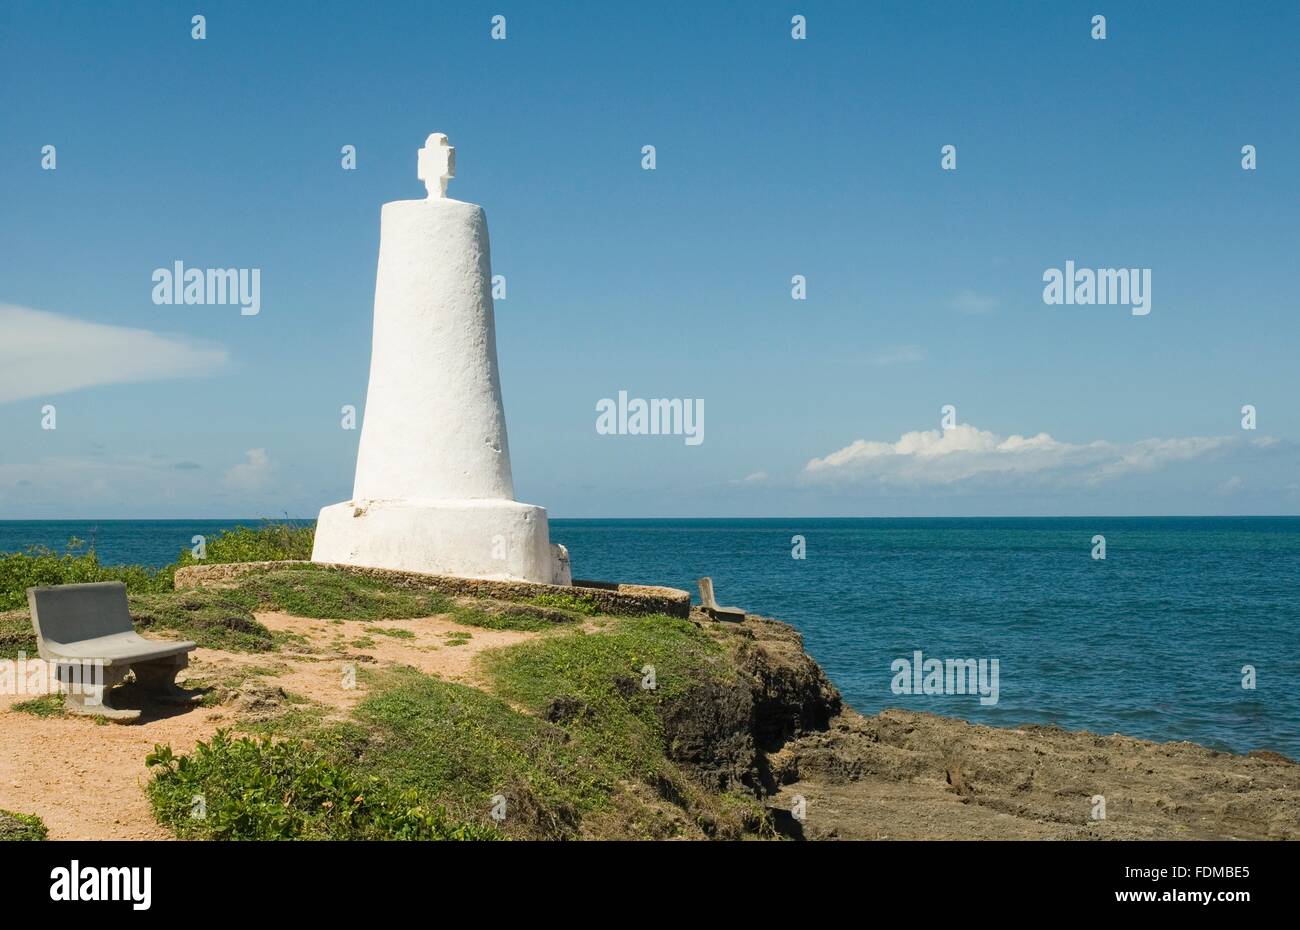 Kenya, Malindi, Vasco da Gama Pillar, overlooking sea Stock Photo